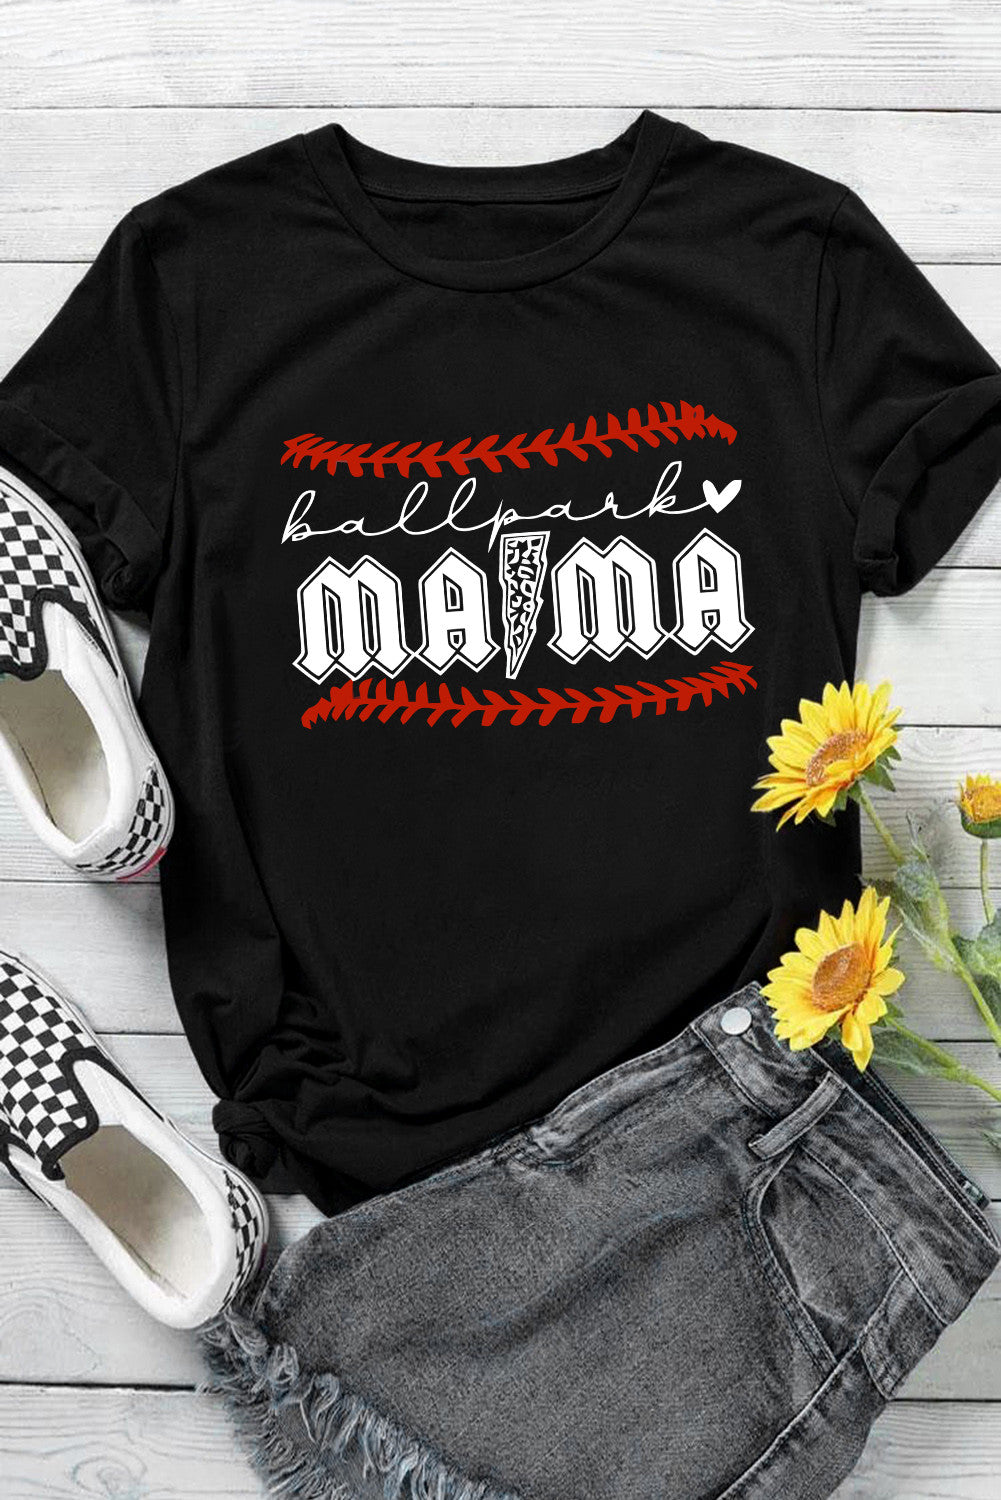 Black MAMA Letter Baseball Graphic Print Short Sleeve T Shirt